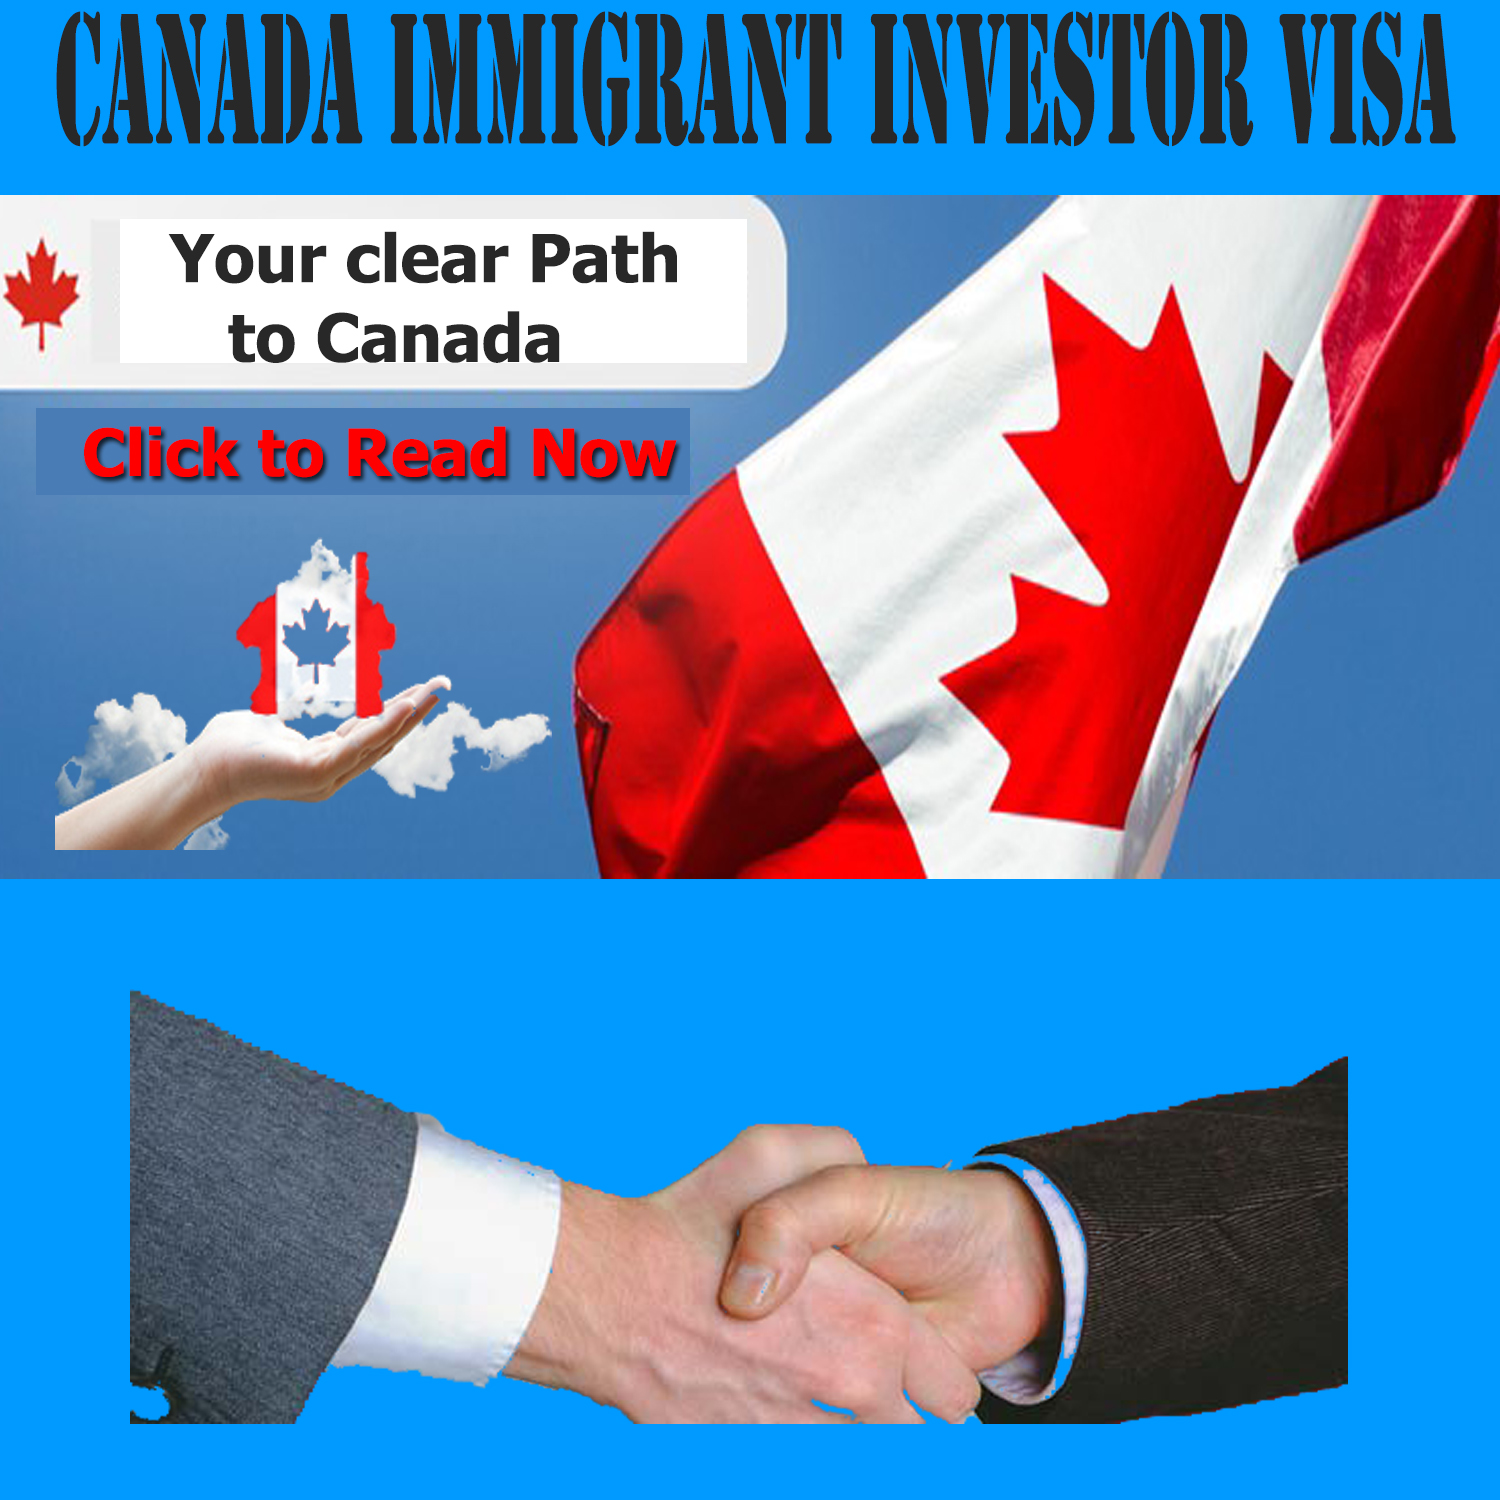 Canada’s Investors Visa Program